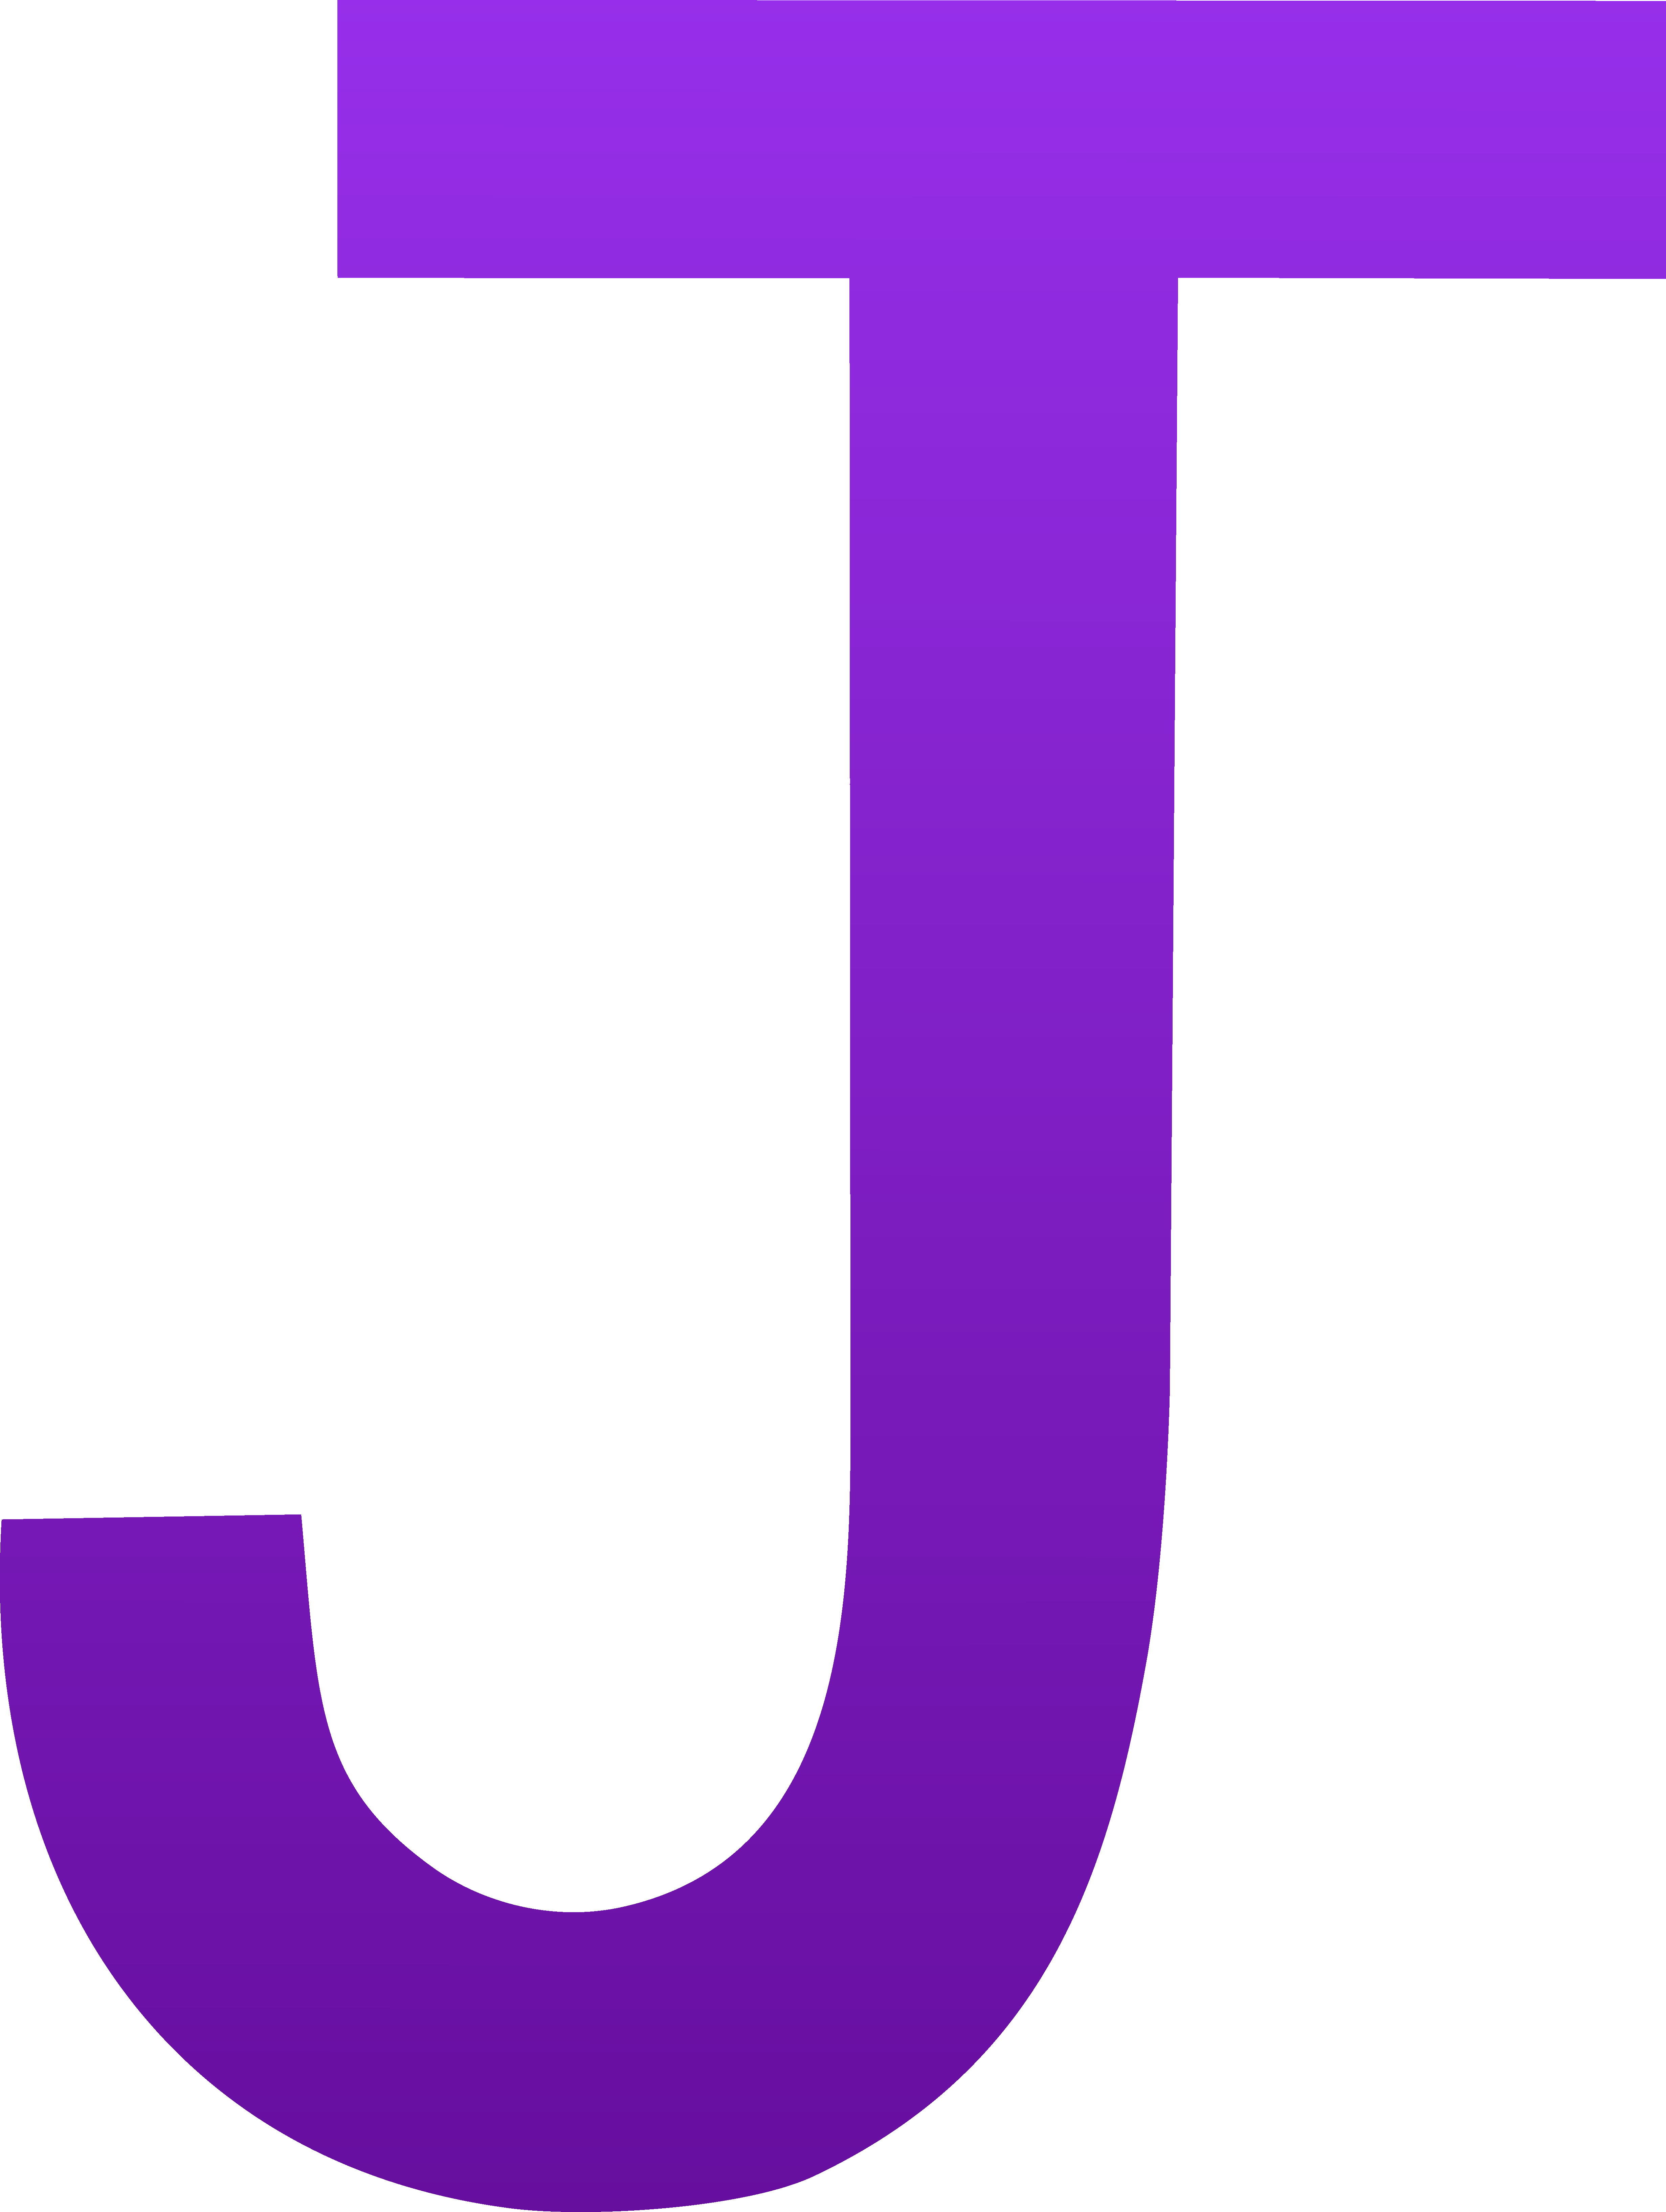 The Letter J - Free Clip Art